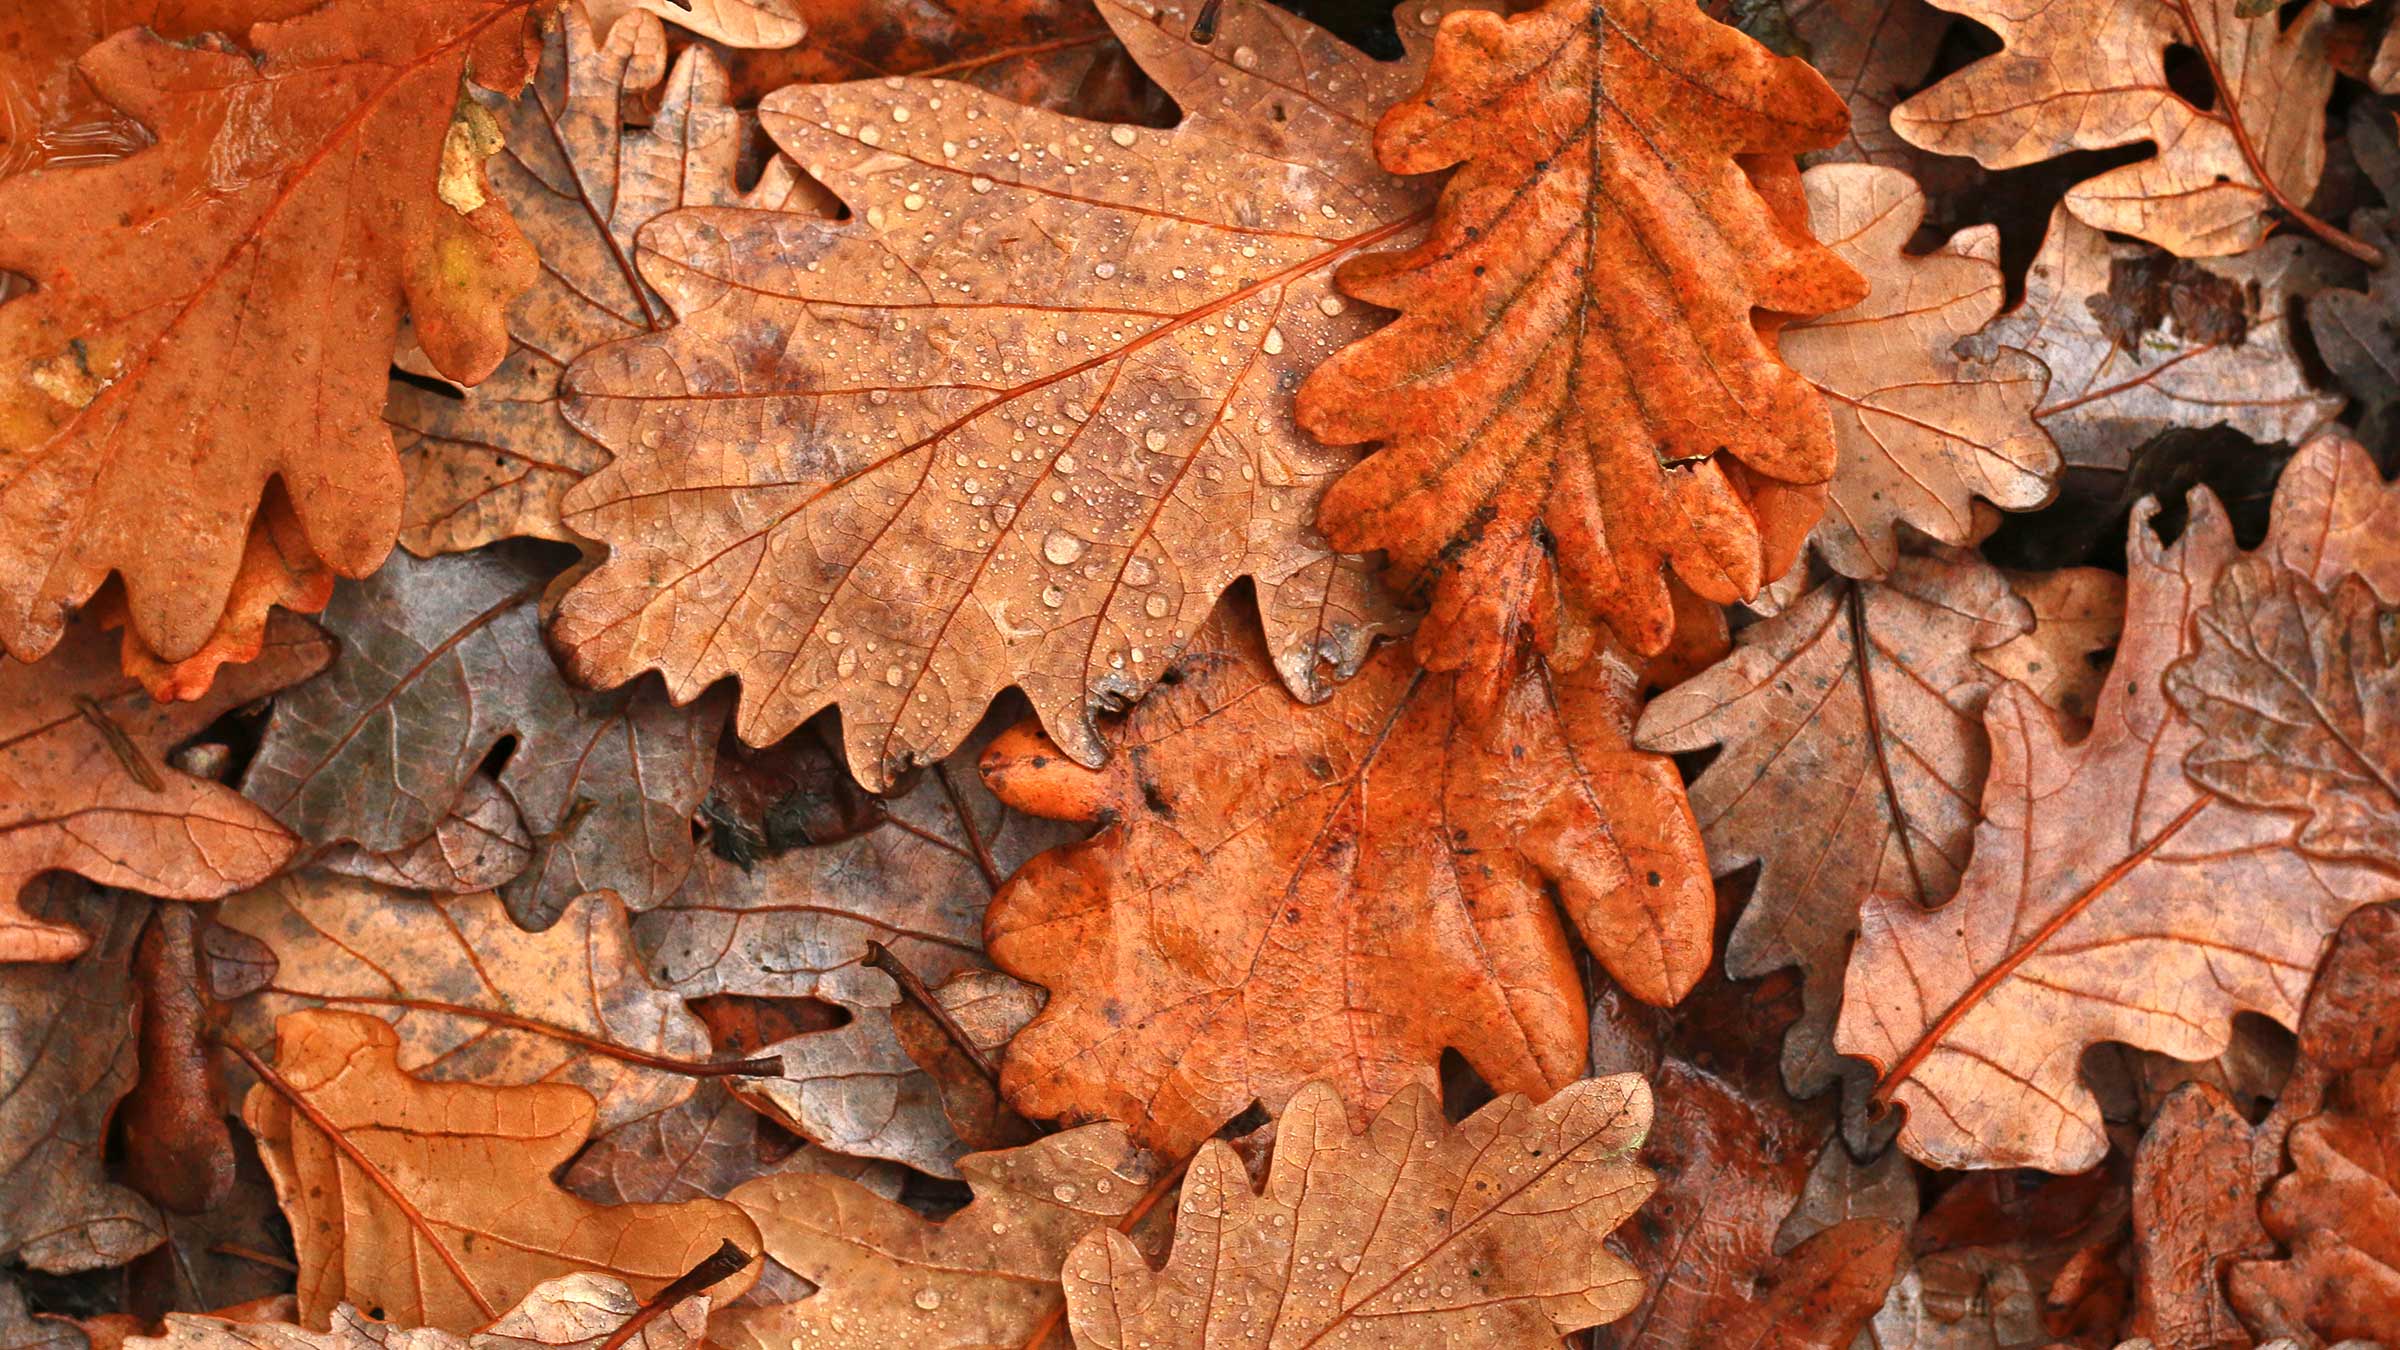 Autumn leaves wellbeing hub